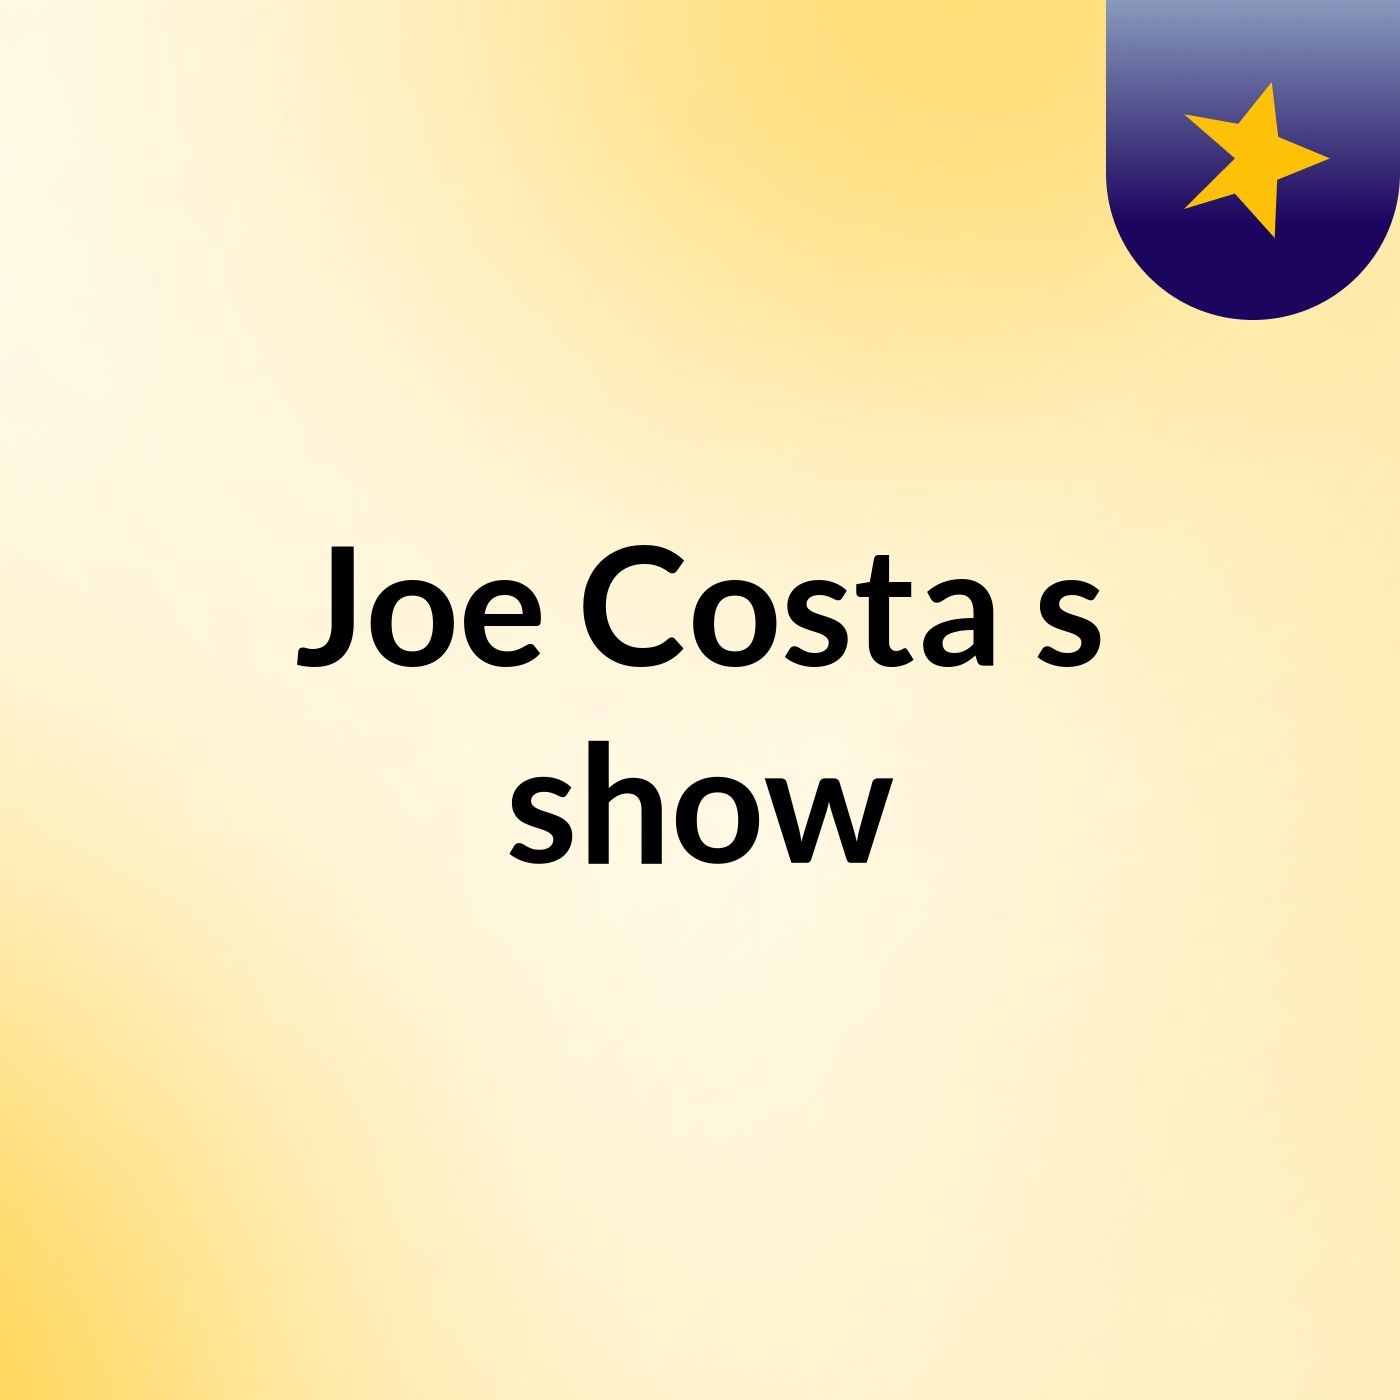 Joe Costa's show